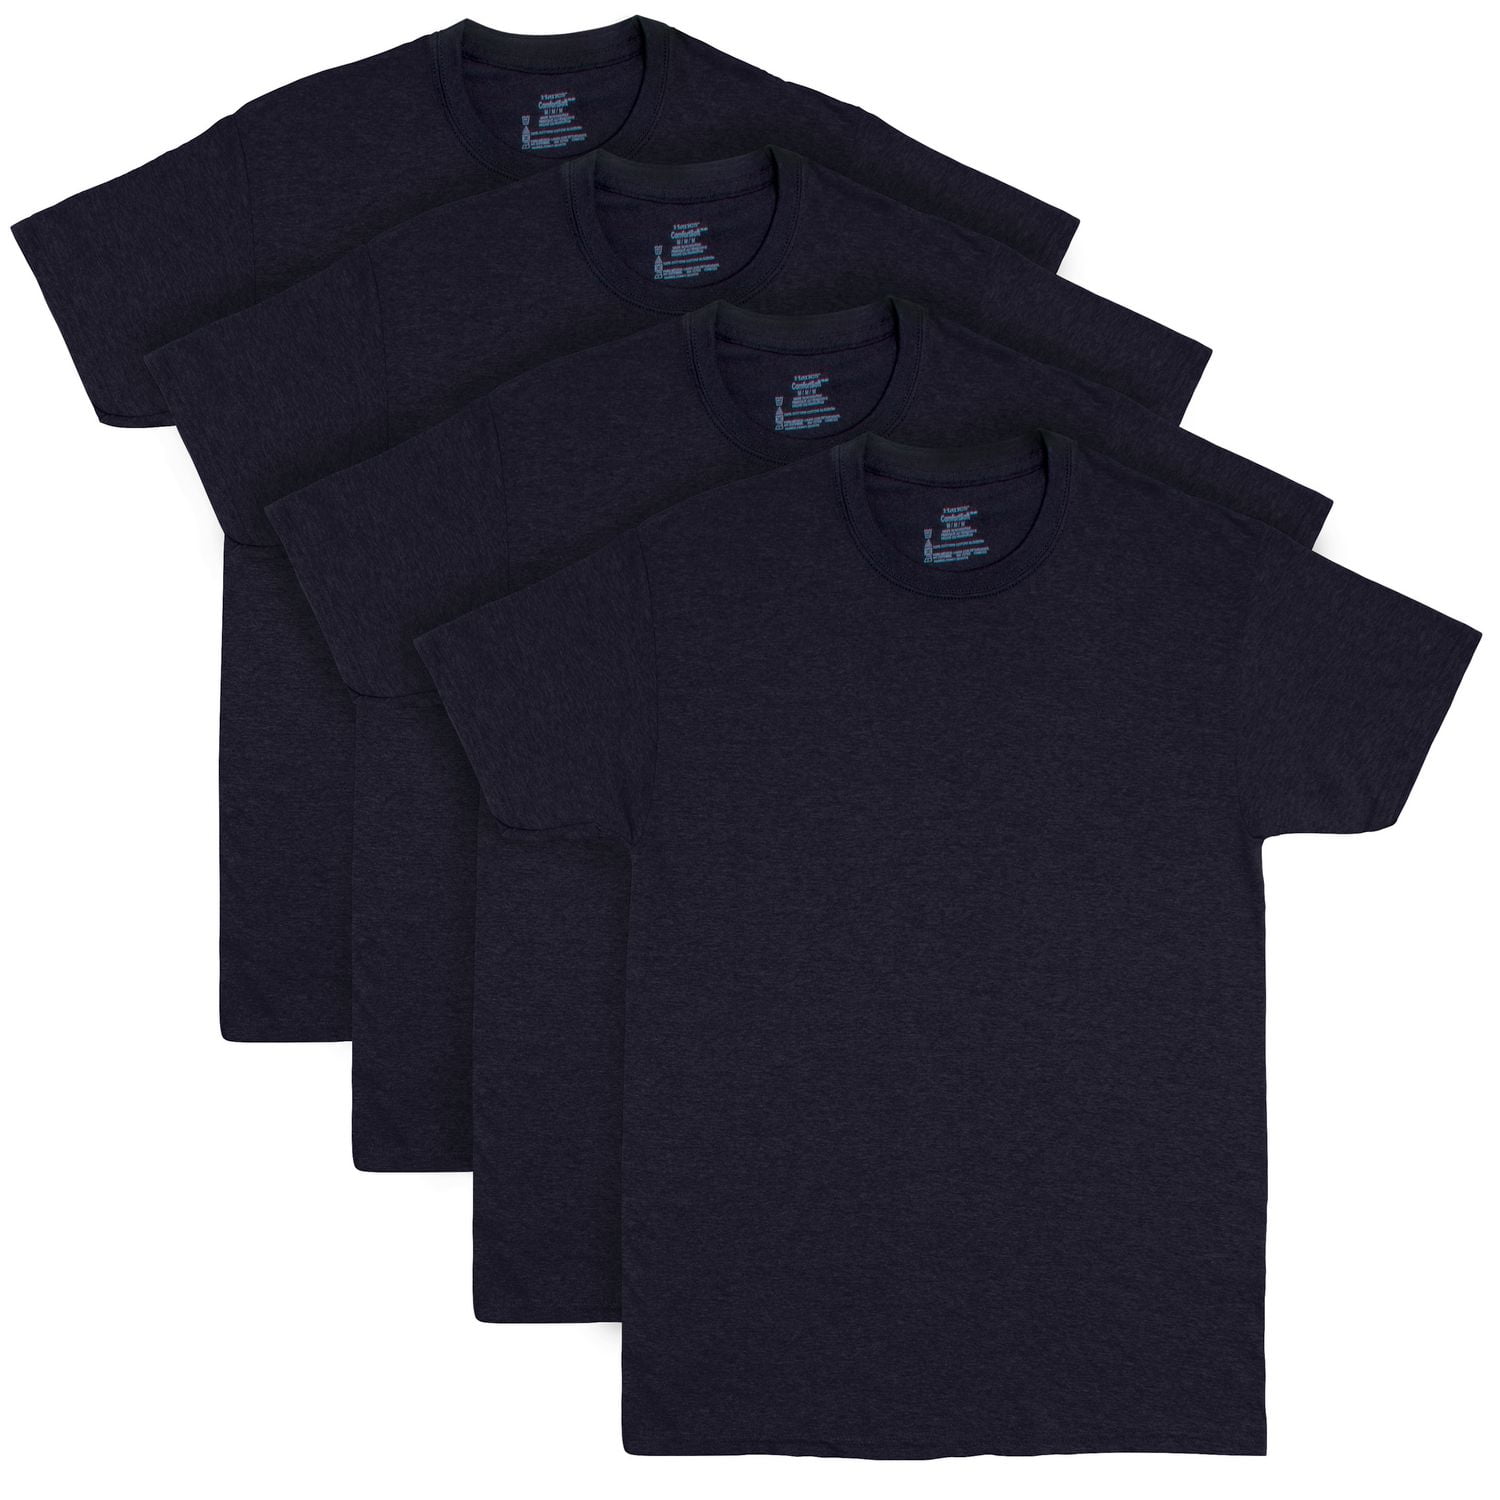 Hanes® ComfortSoft® Adult Long Sleeve T-Shirt - Personalization